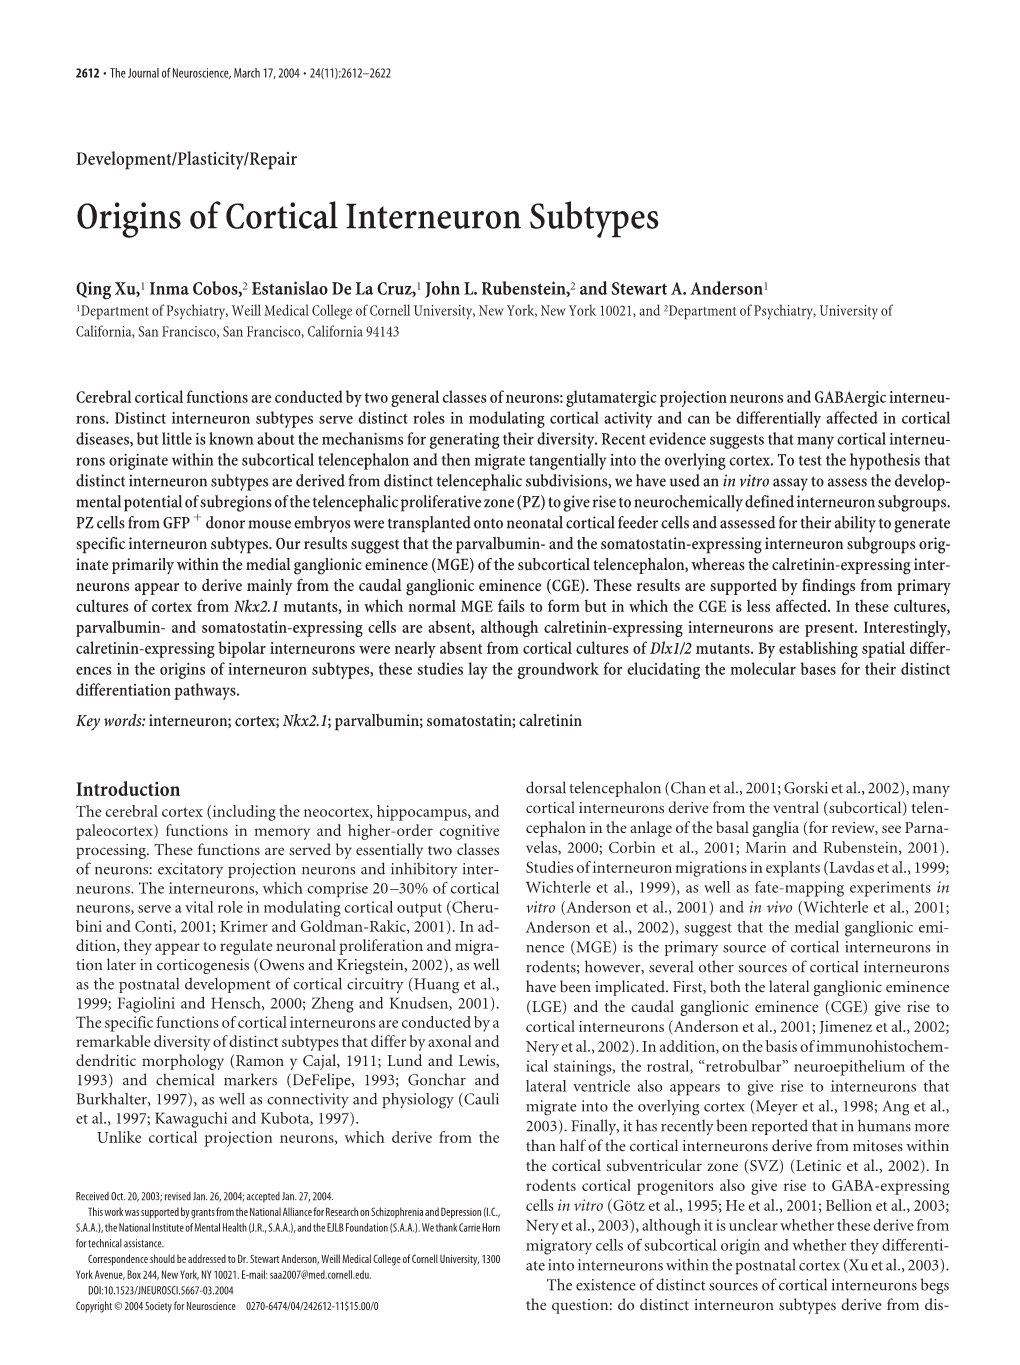 Origins of Cortical Interneuron Subtypes